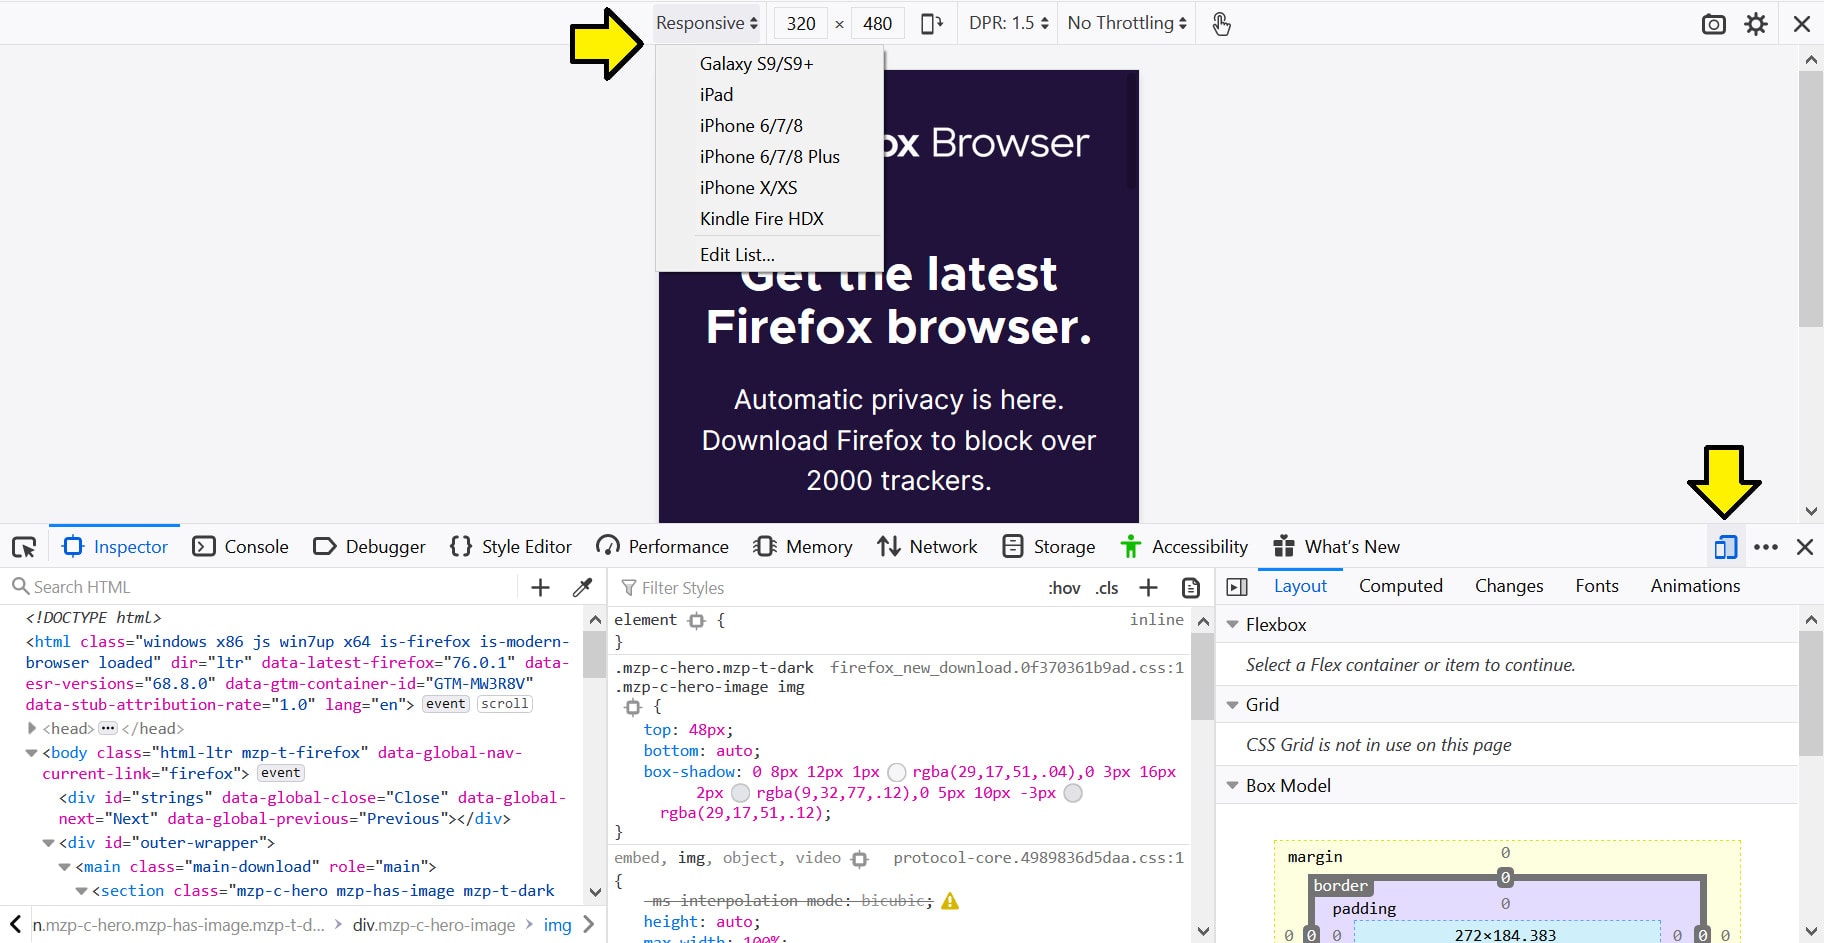 Firefox screen size